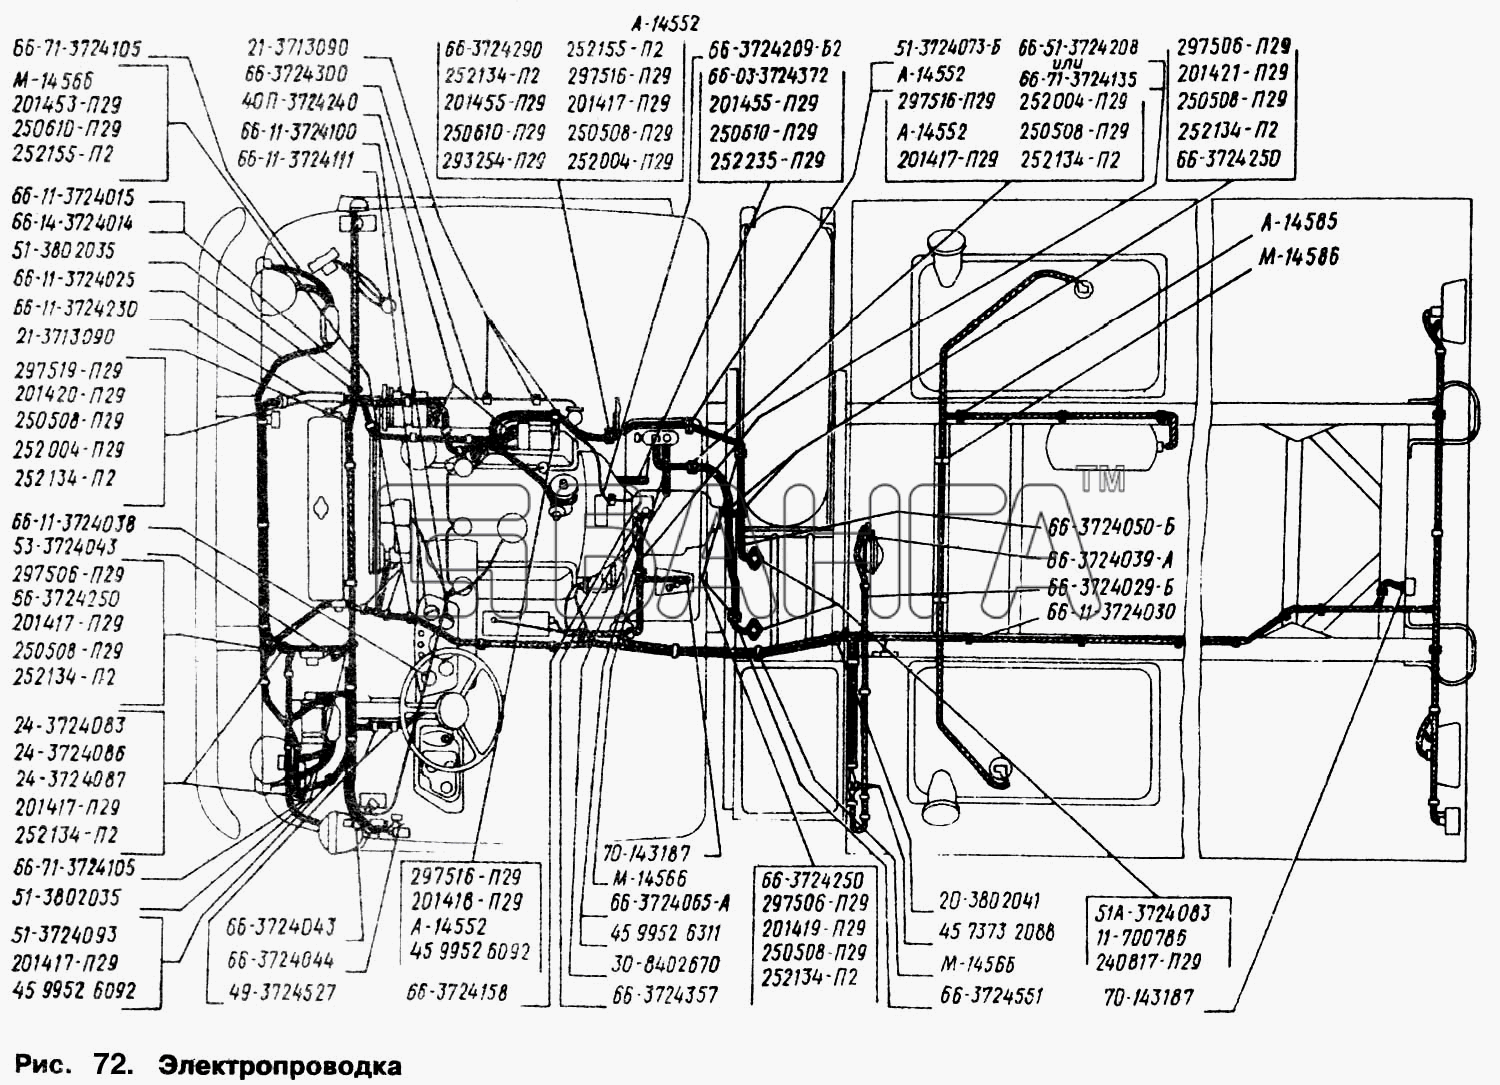 ГАЗ ГАЗ-66 (Каталог 1996 г.) Схема Электропроводка-124 banga.ua